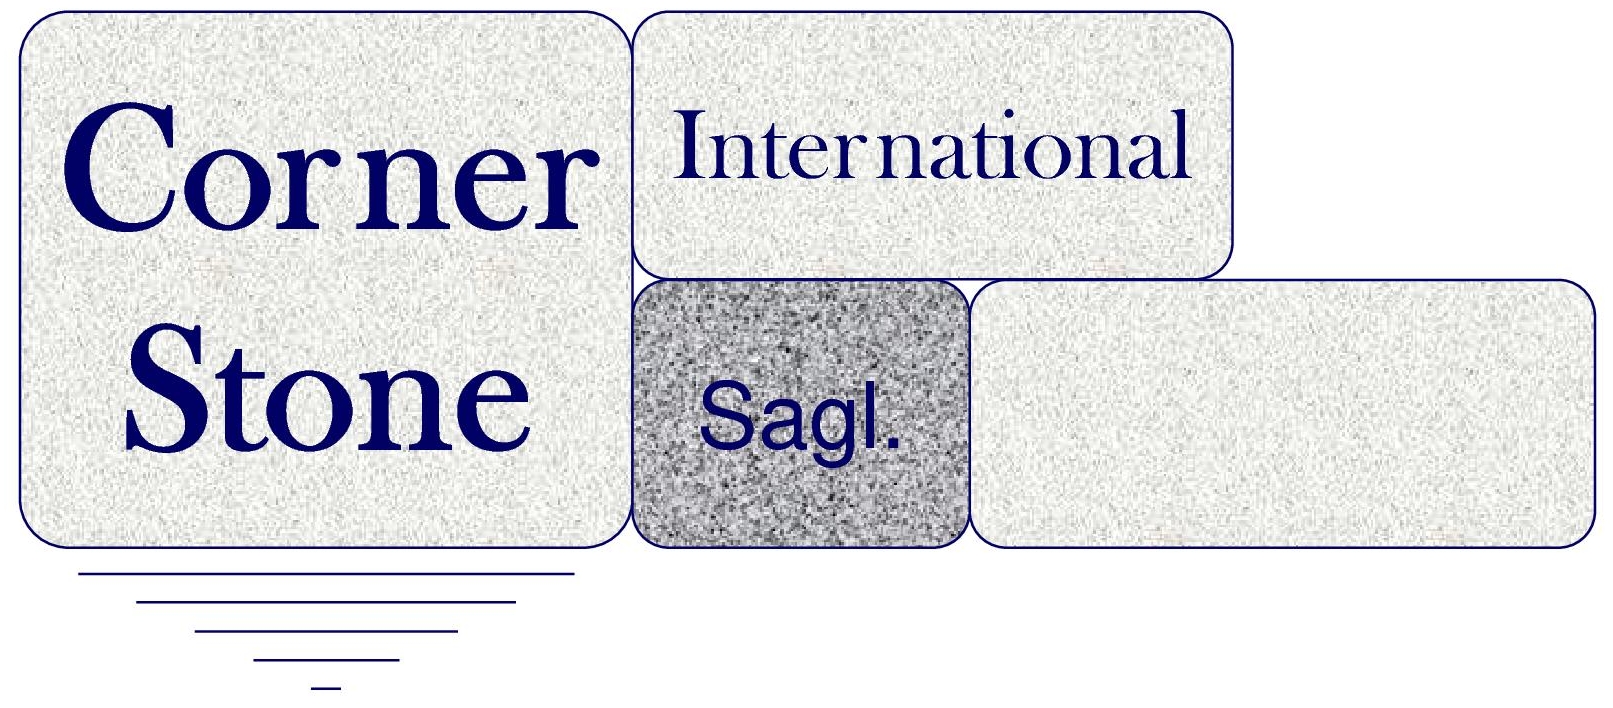 Corner Stone International Sagl.